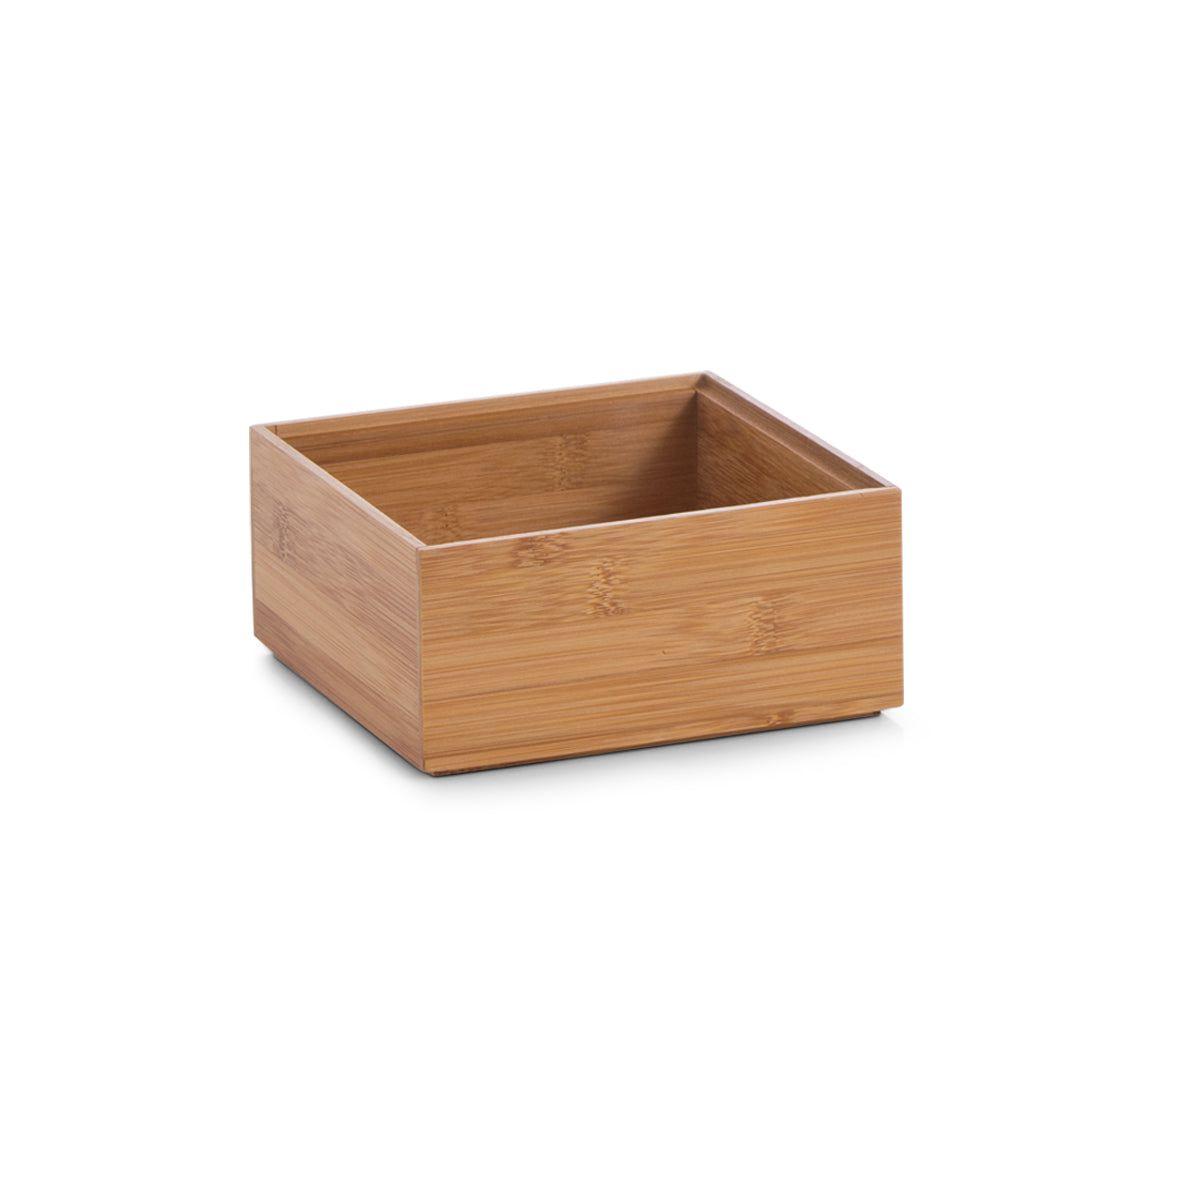 Small drawer box